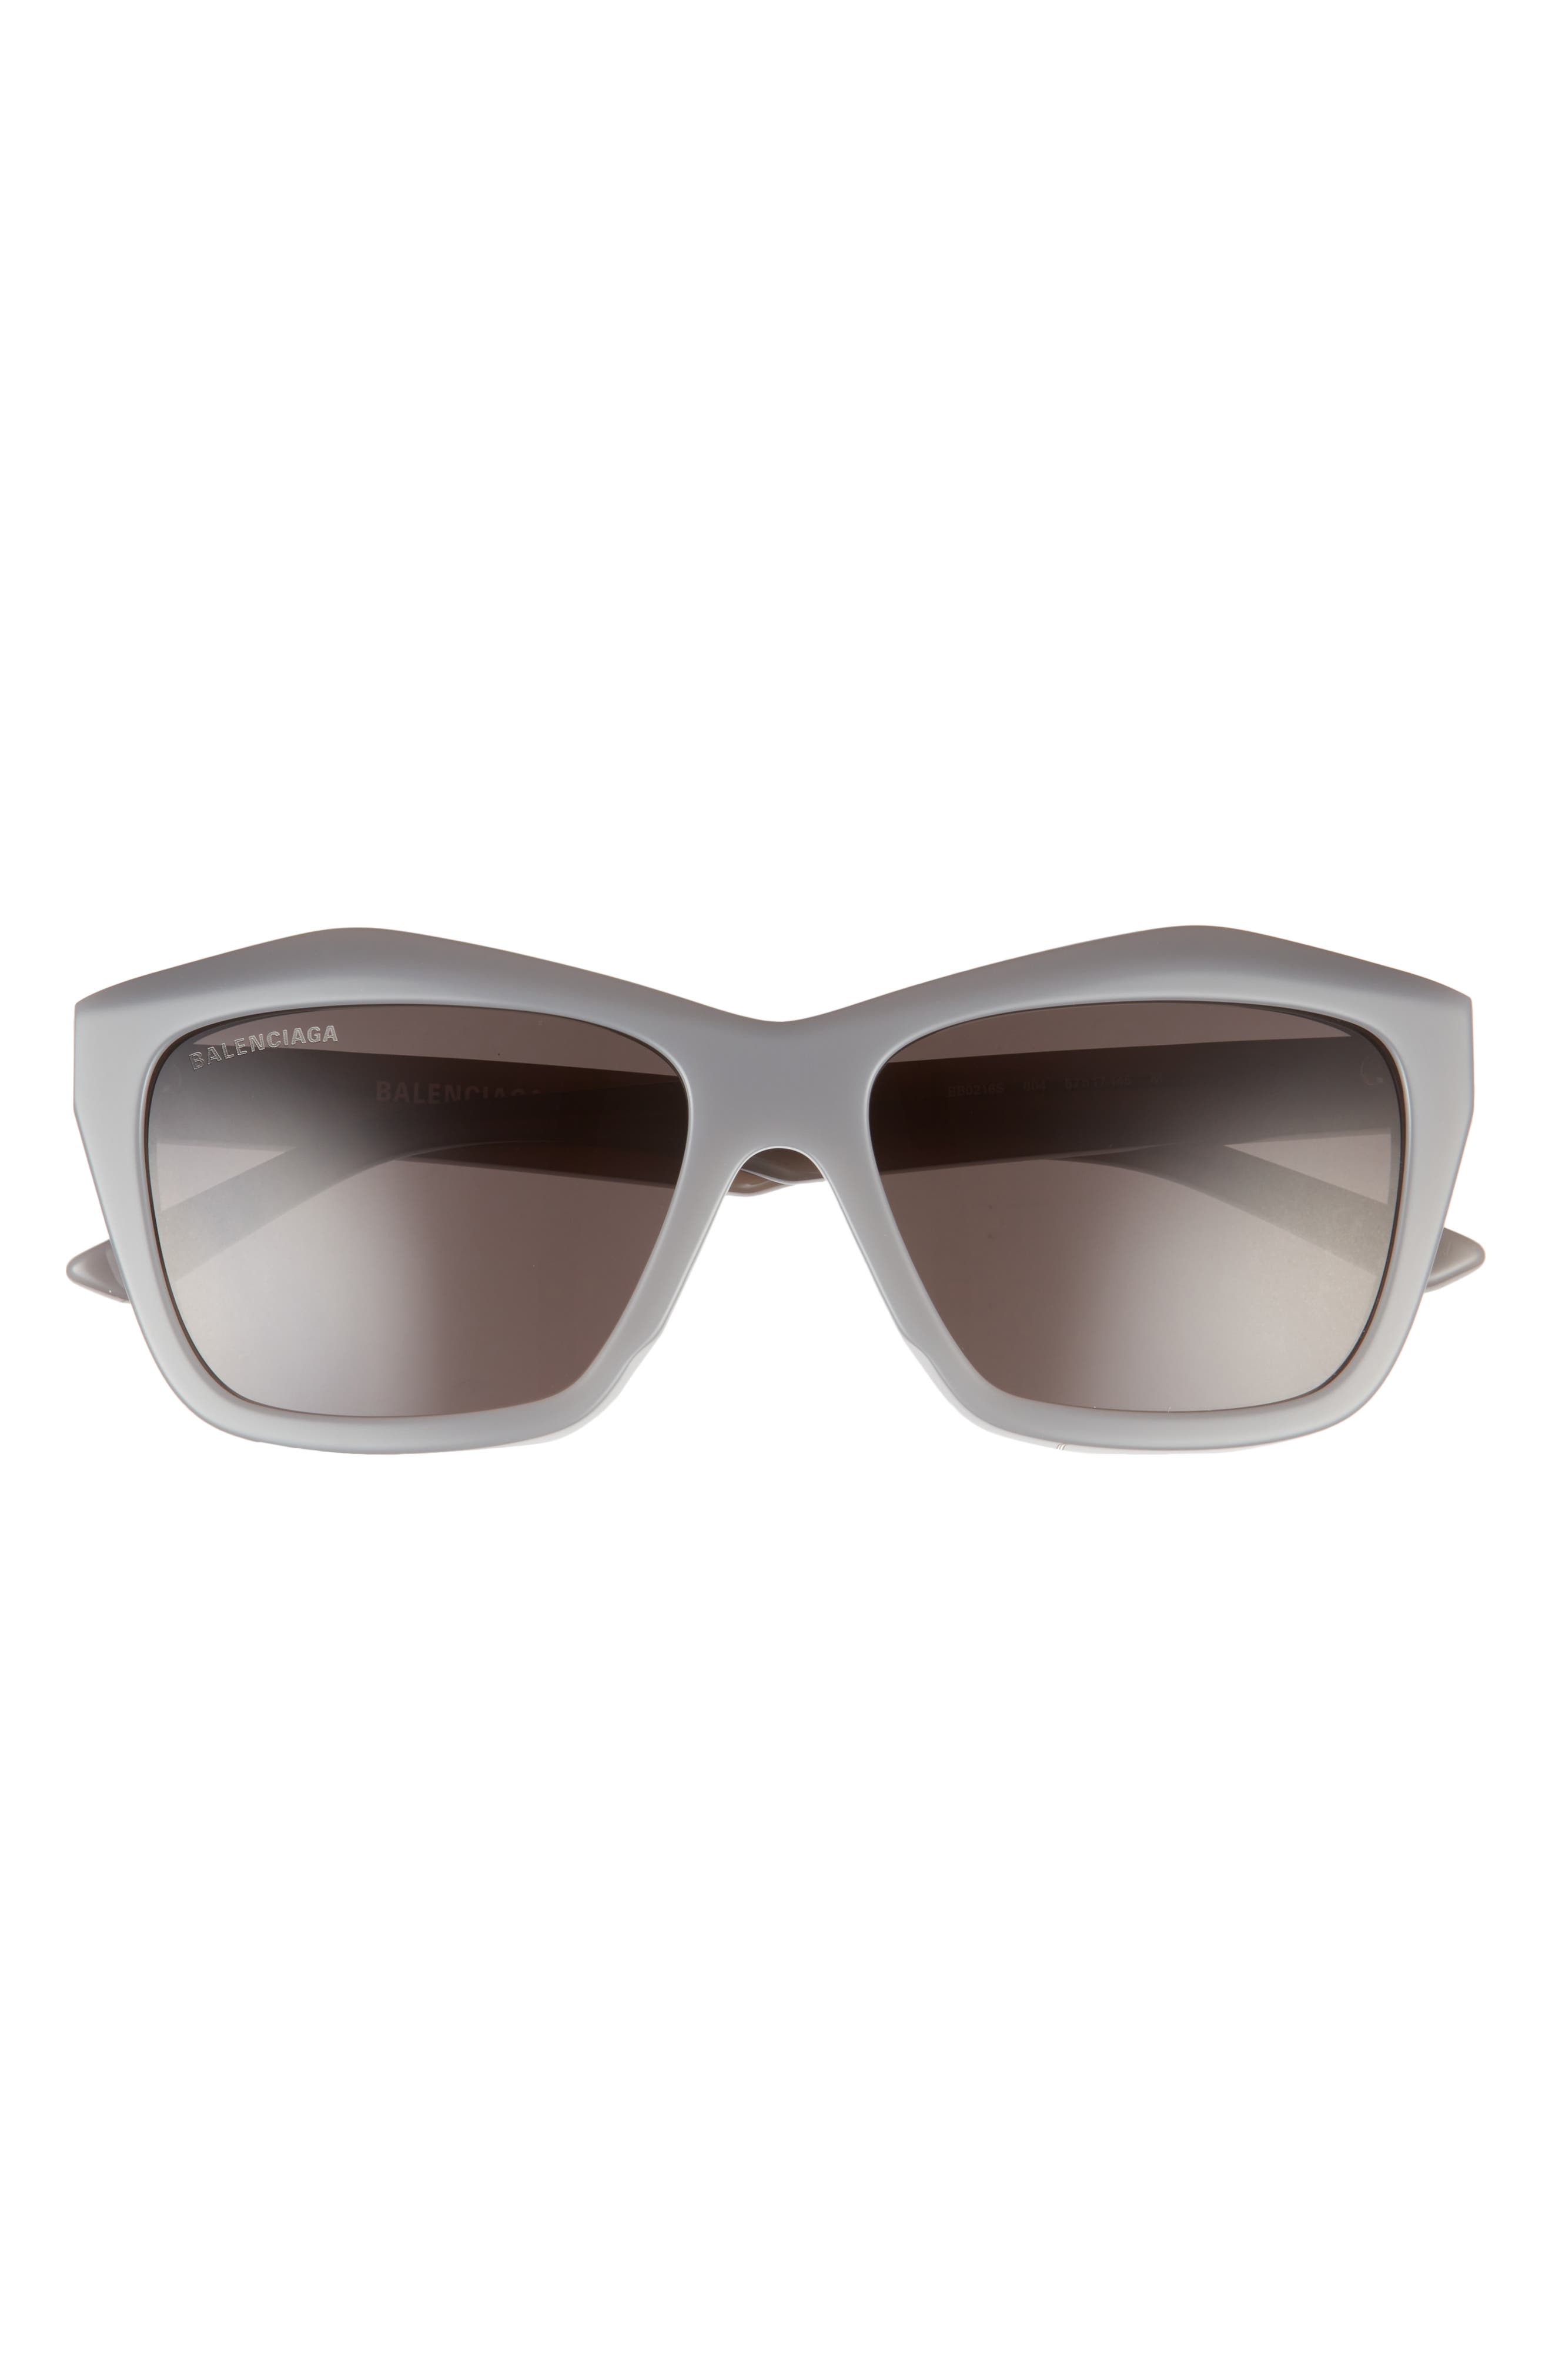 Balenciaga 57mm Rectangle Sunglasses in Grey at Nordstrom